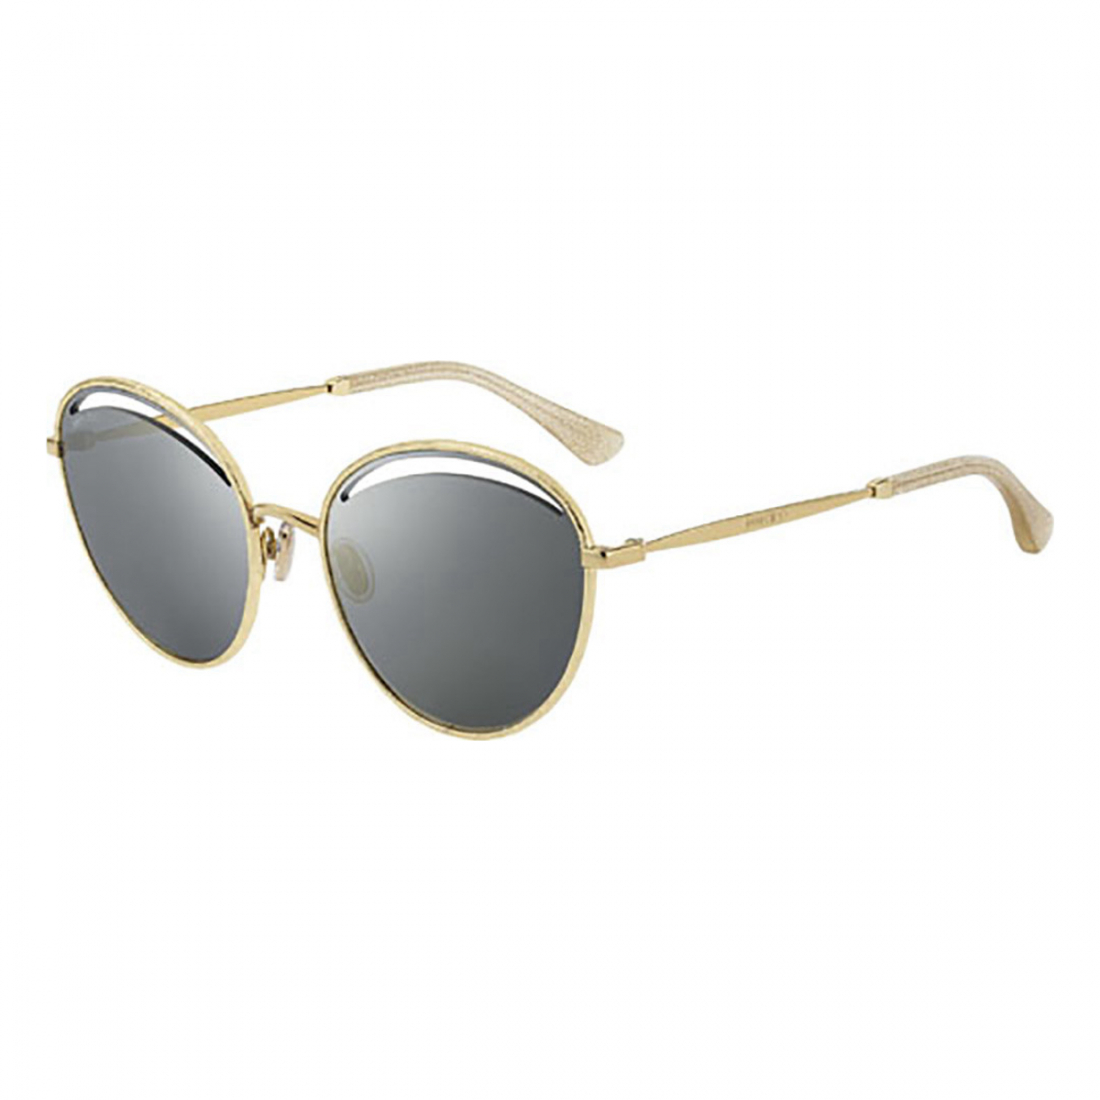 Women's 'MALYA/S J5G GOLD' Sunglasses